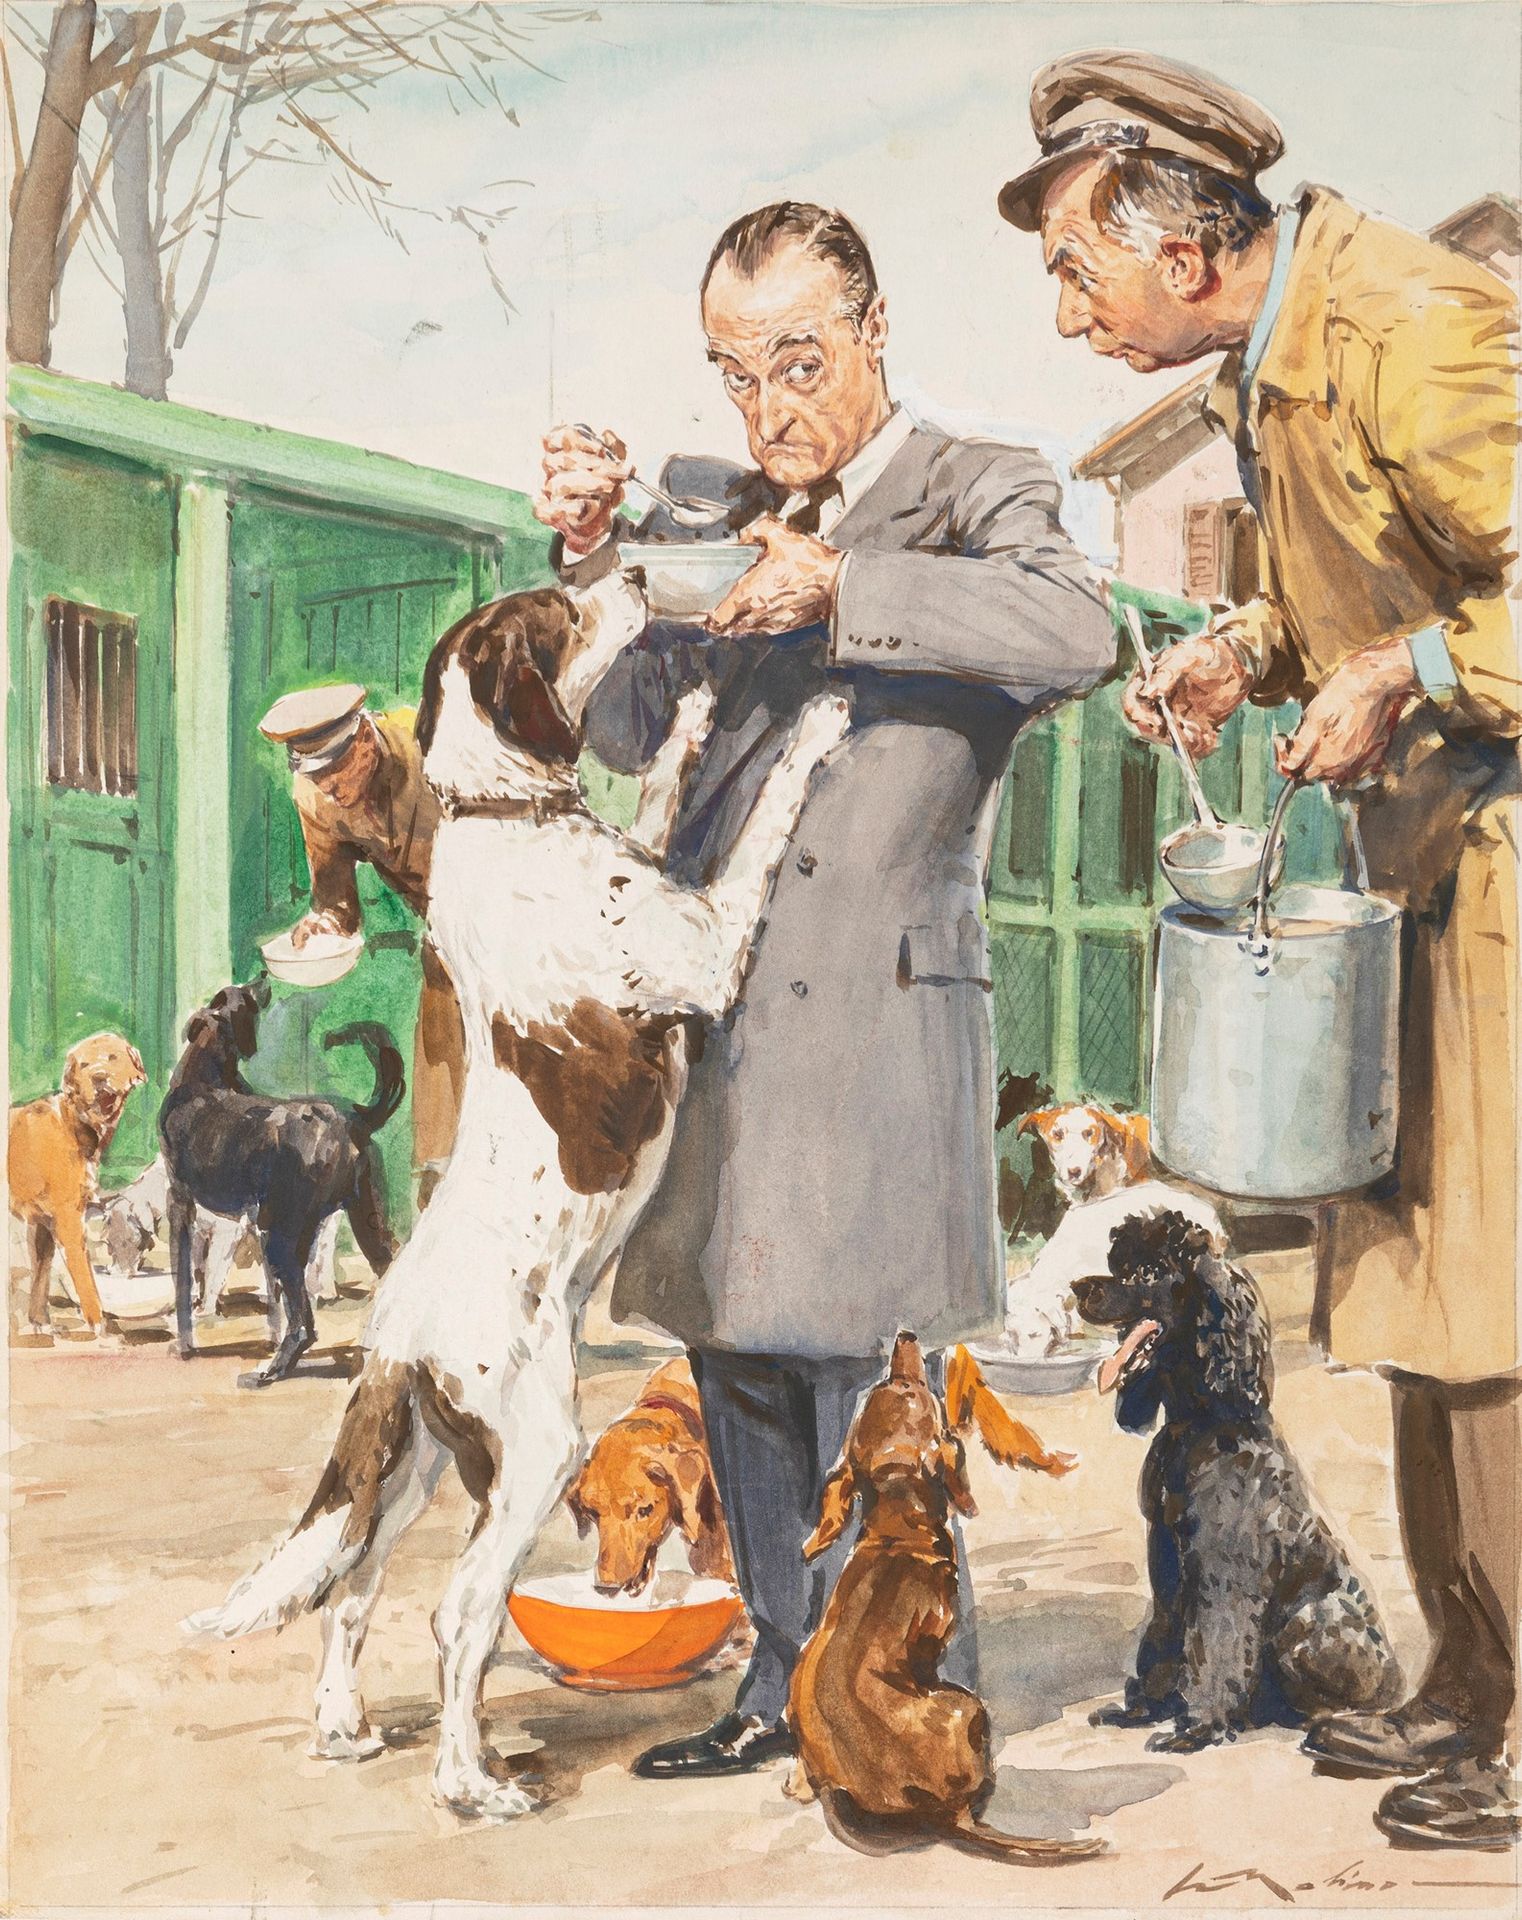 Walter Molino Totò e i suoi cani

薄纸板上的钢笔画和水彩画
26 x 32 cm
莫利诺在1960年代为法国电影和娱乐杂志《节&hellip;